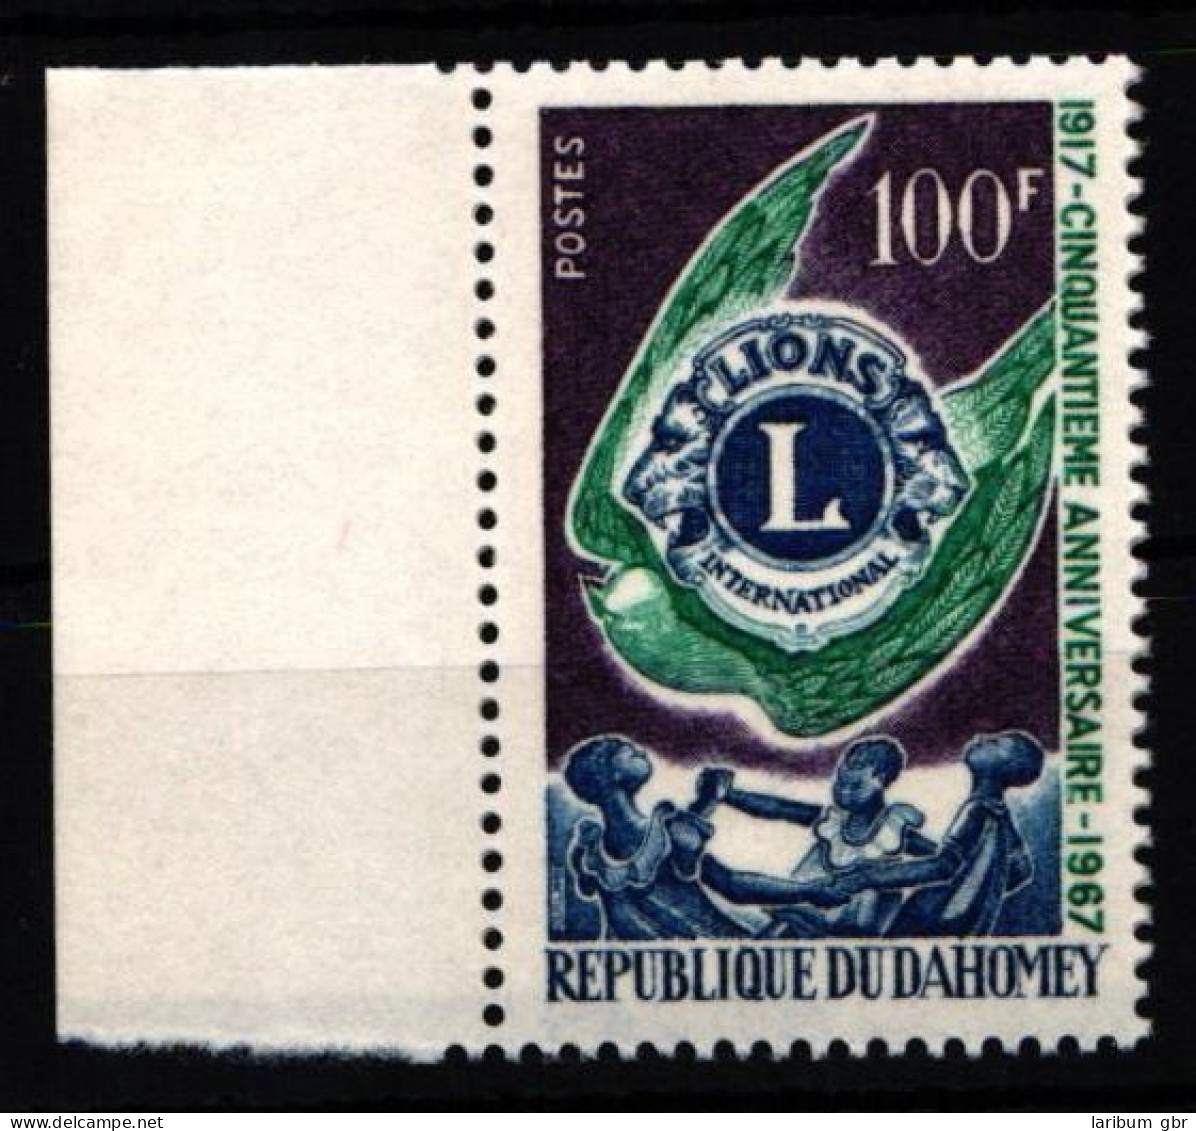 Benin (Dahomey) 306 Postfrisch #KA206 - Benin - Dahomey (1960-...)